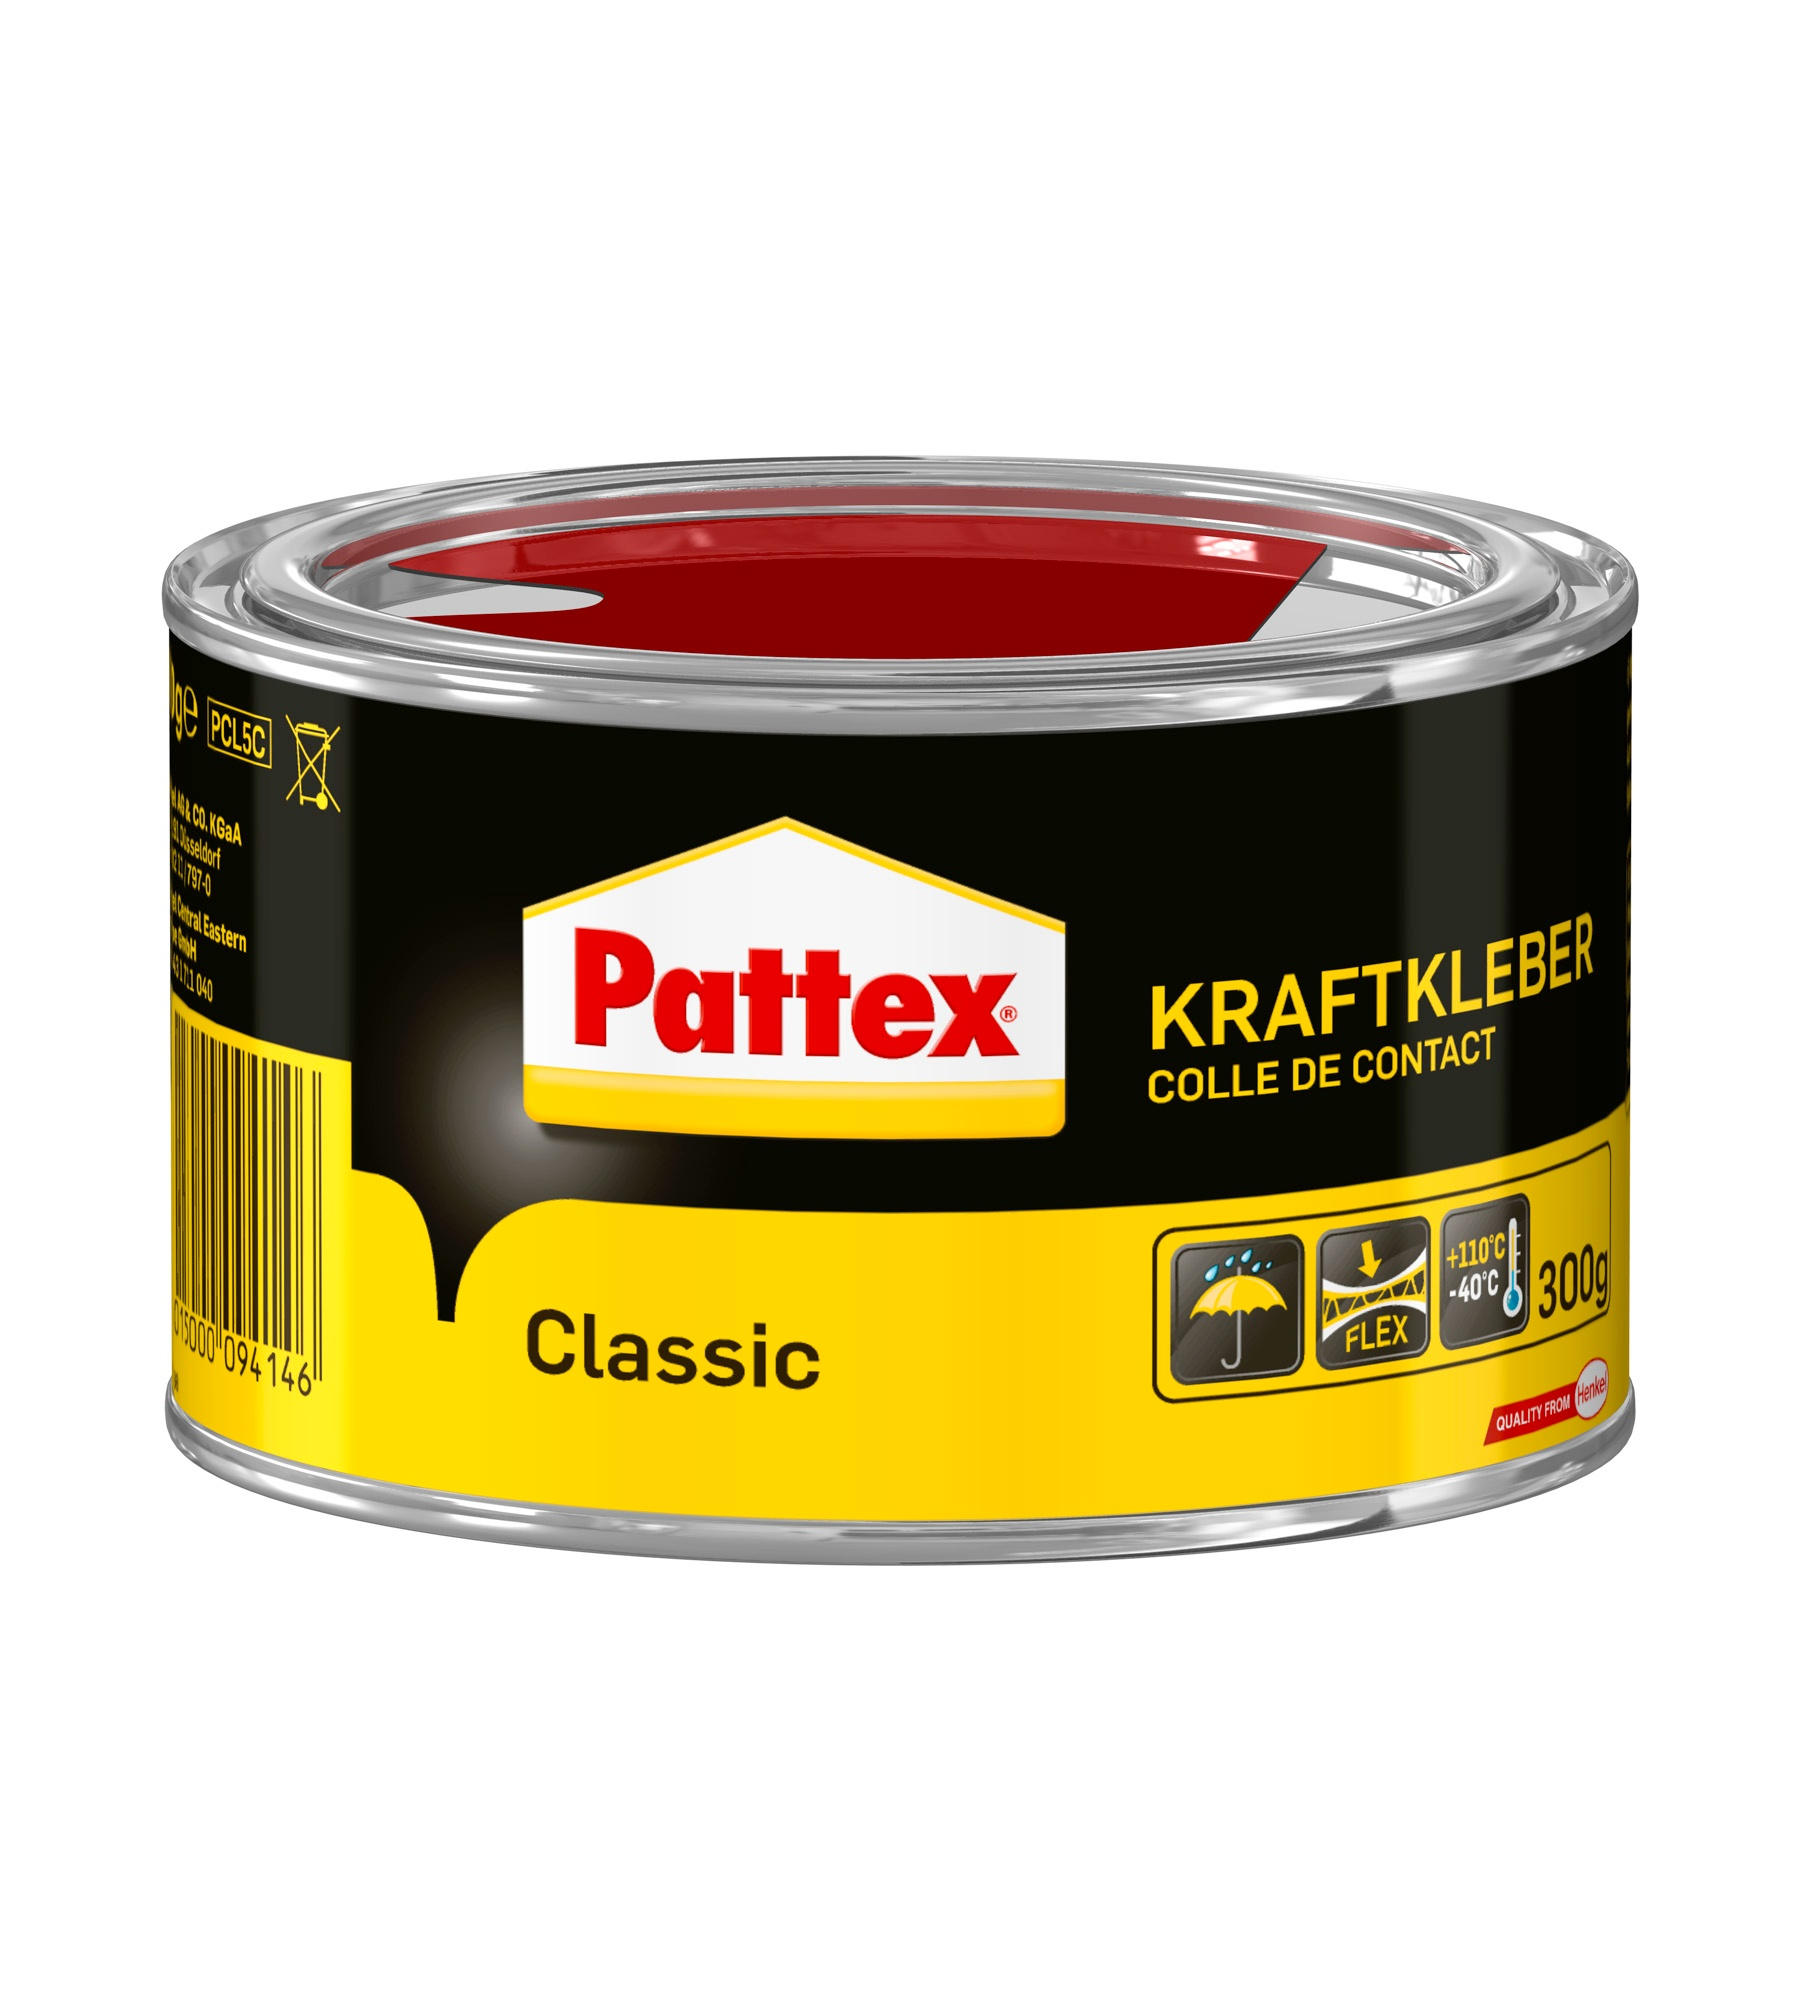 Pattex Kraftkleber Classic hochwärmefest, 300 g